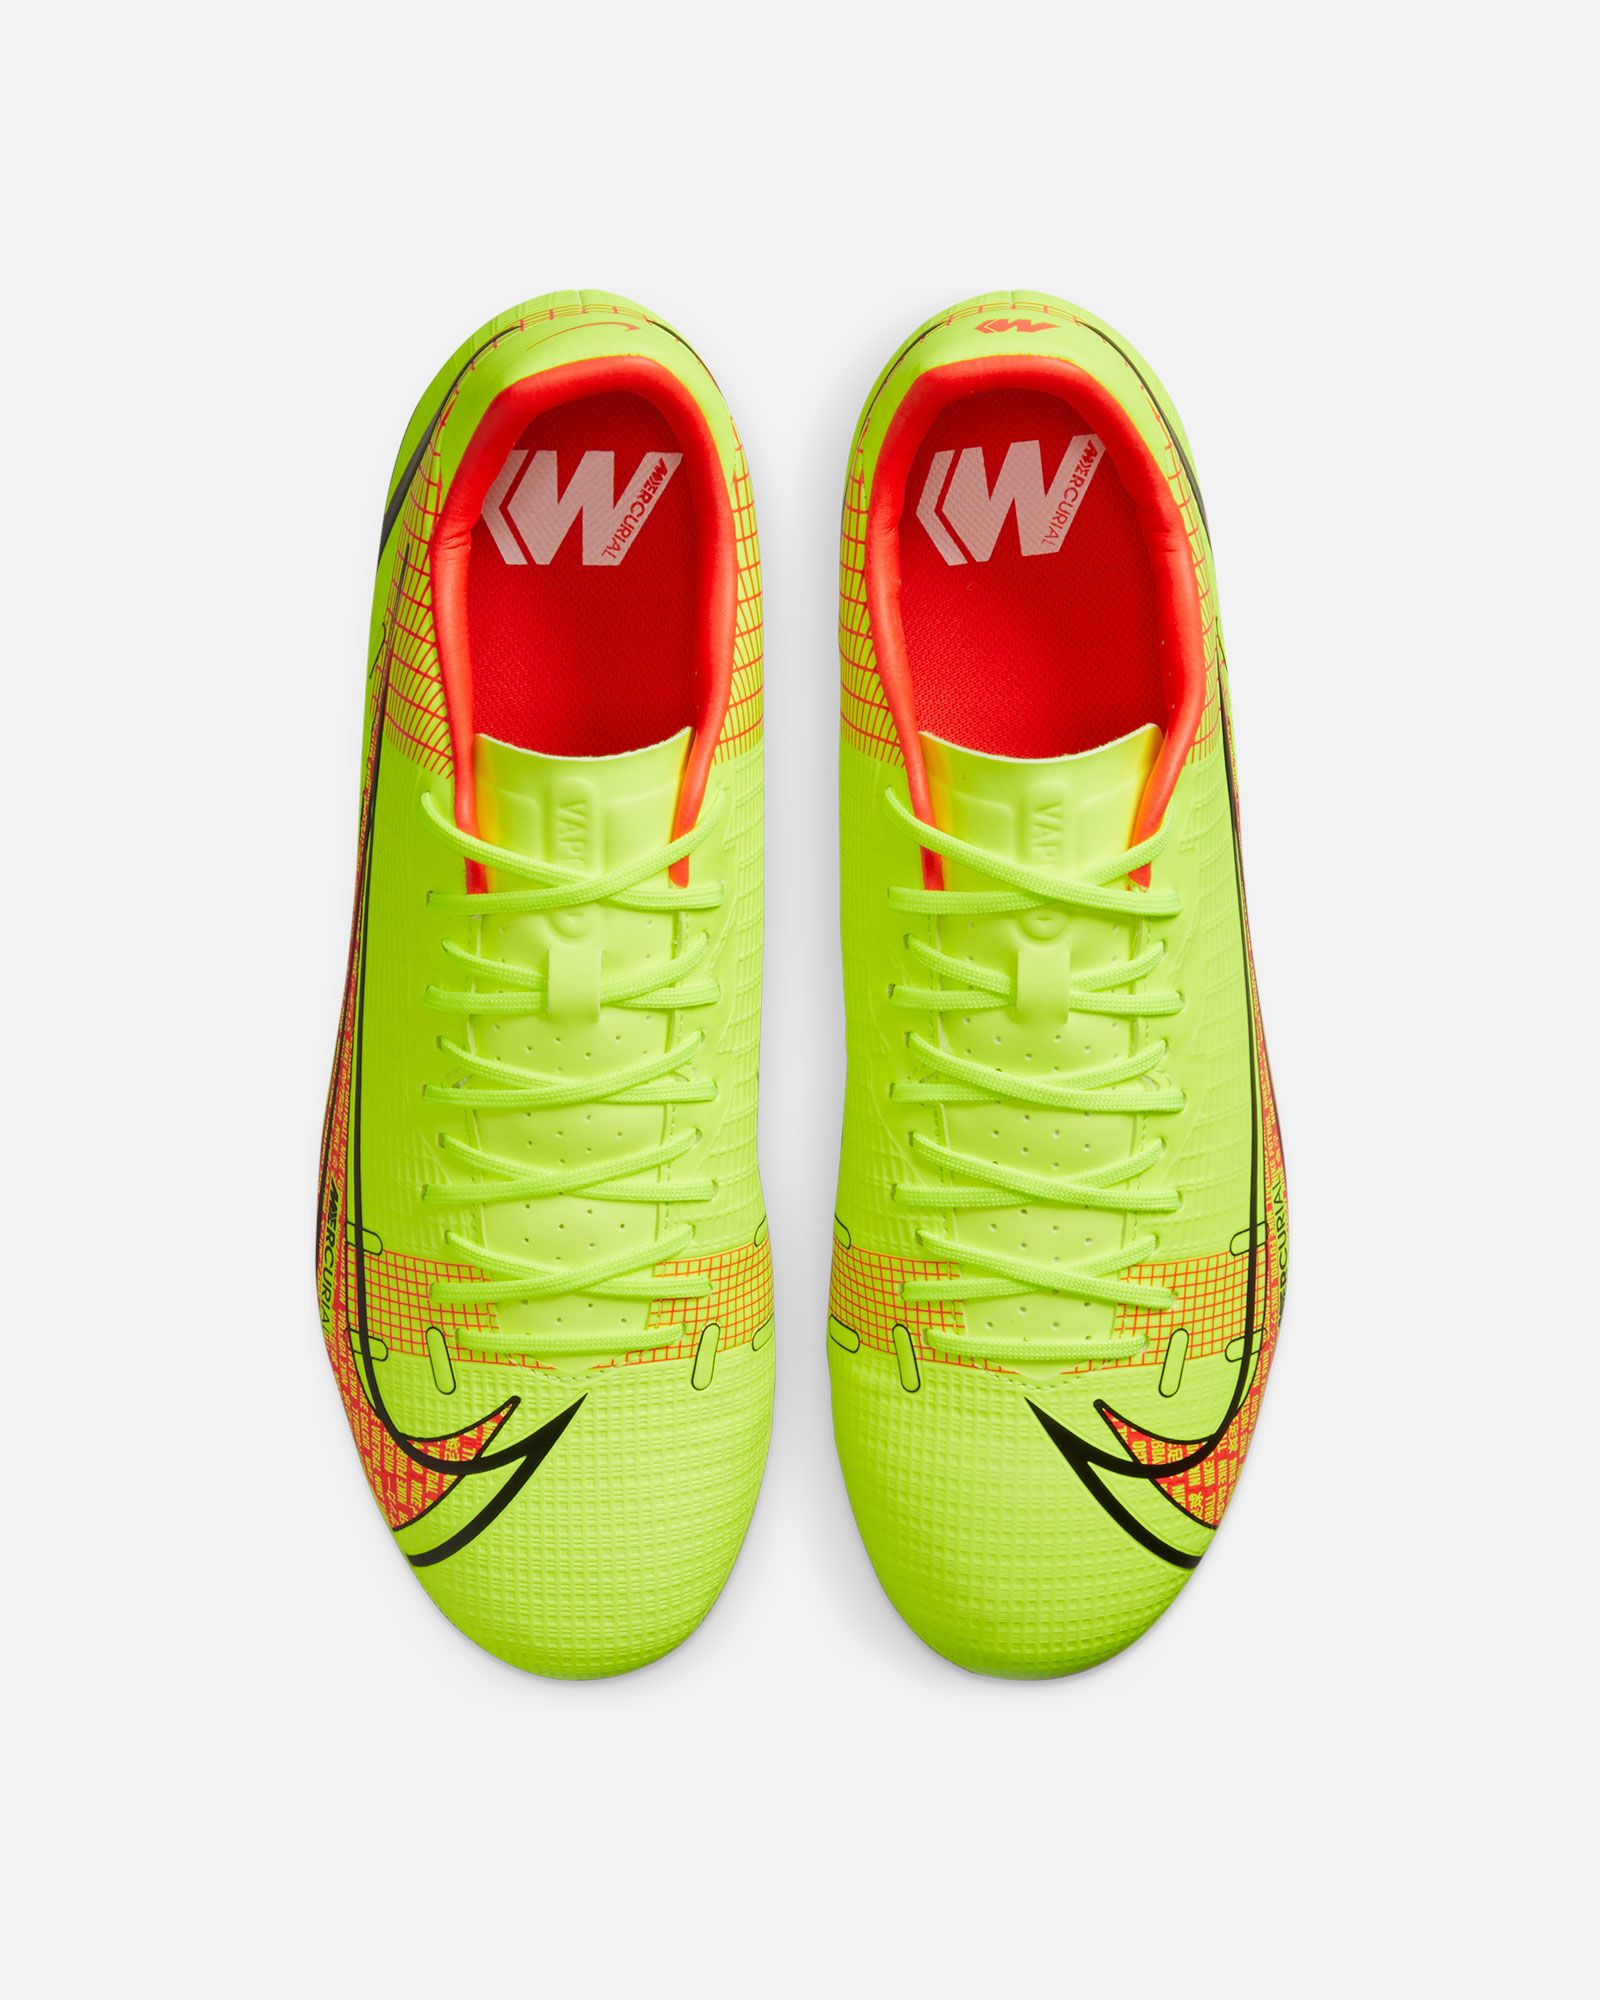 Botas Nike Mercurial Vapor 14 Academy AG - Fútbol Factory